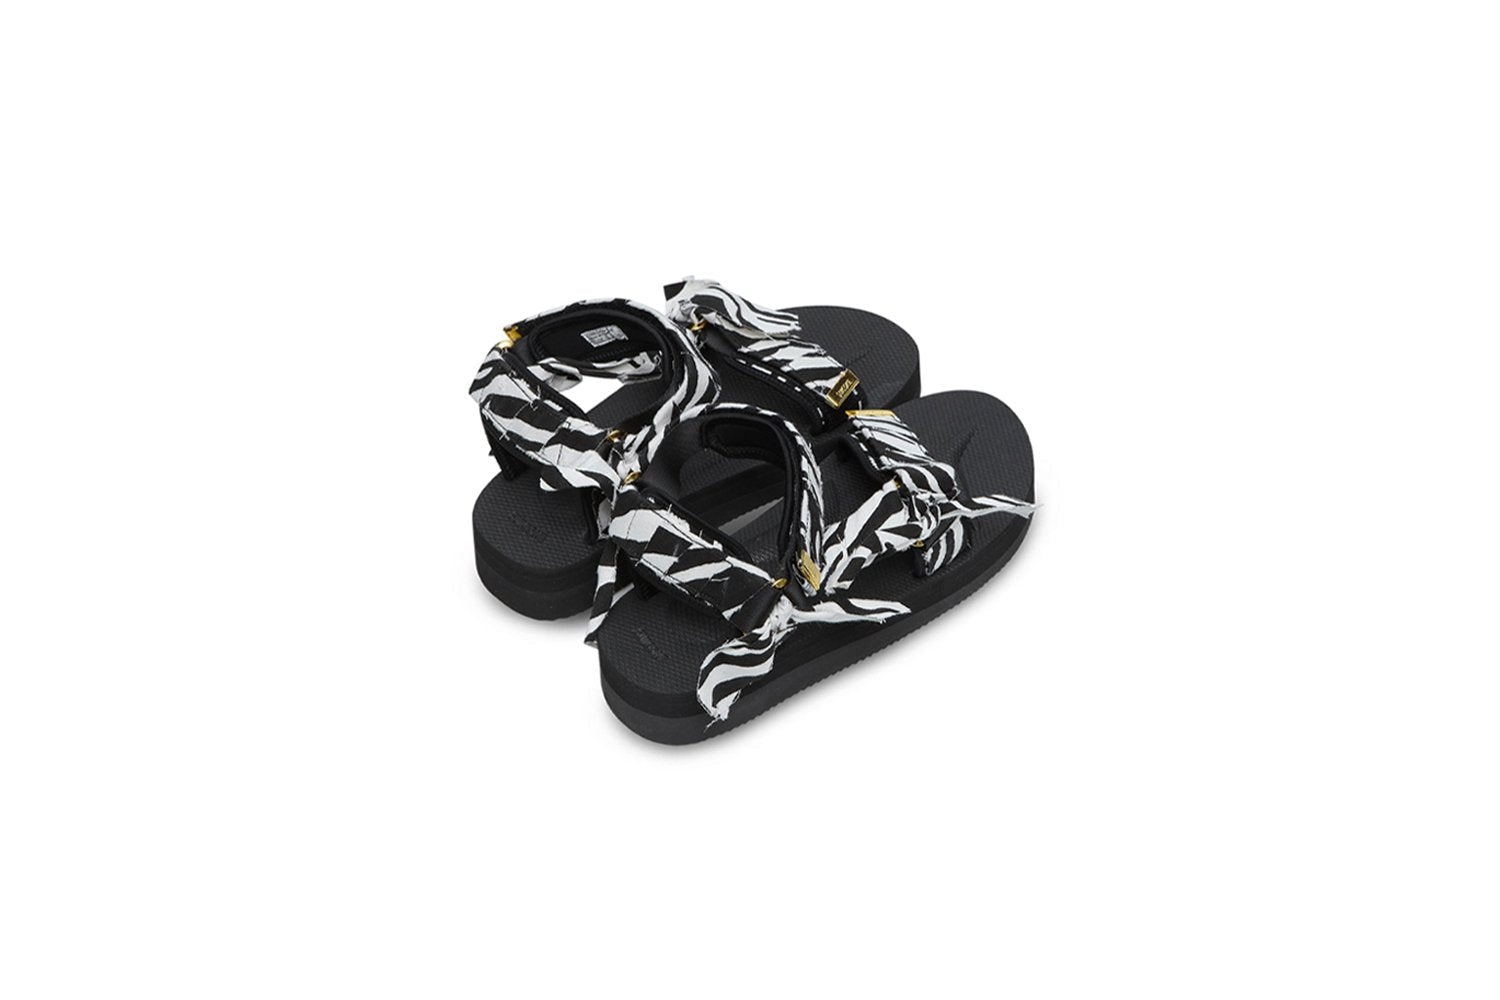 SUICOKE Depa-Fbcpocab-A black platform sandal with zebra printed straps + gold hardware logo tips. From SUICOKE SS21 collection.